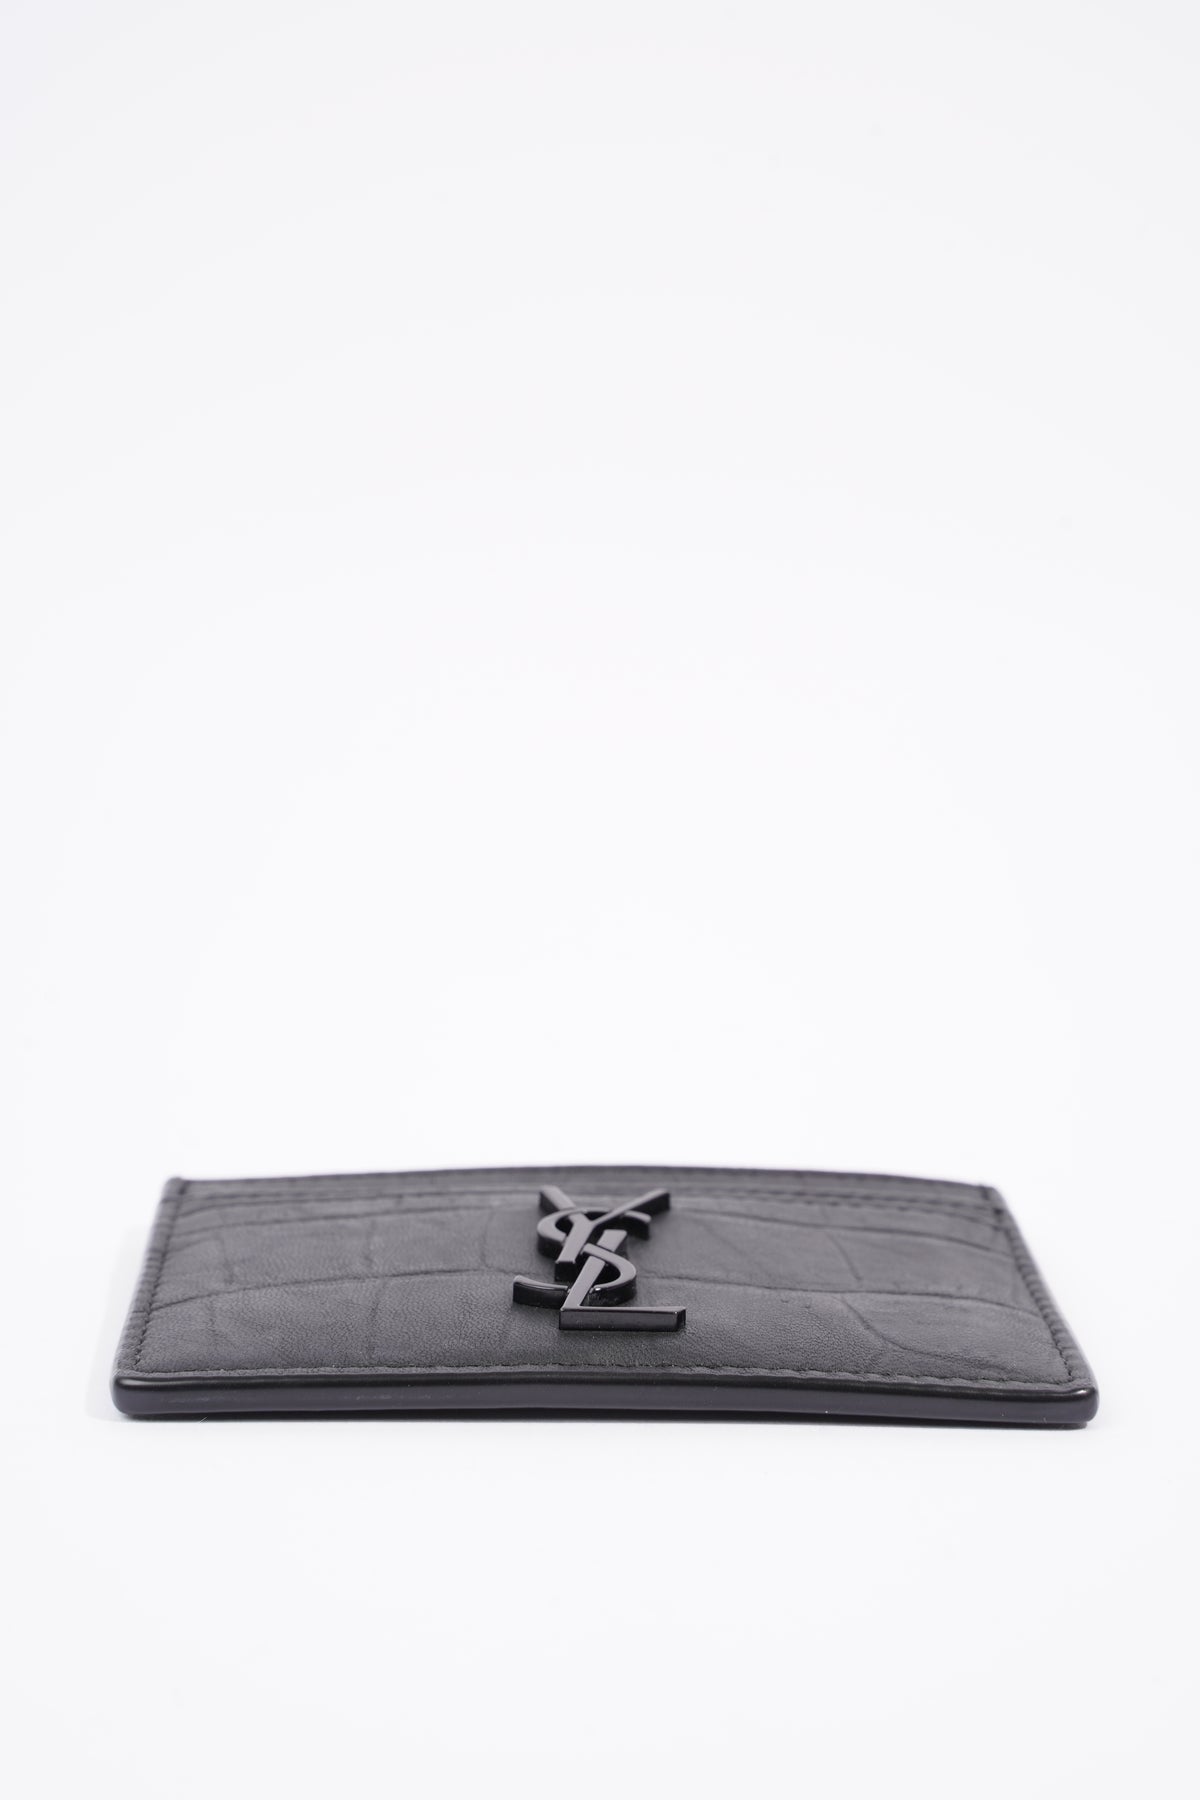 Saint Laurent YSL Monogram Croc-Embossed Leather Card Case, Black